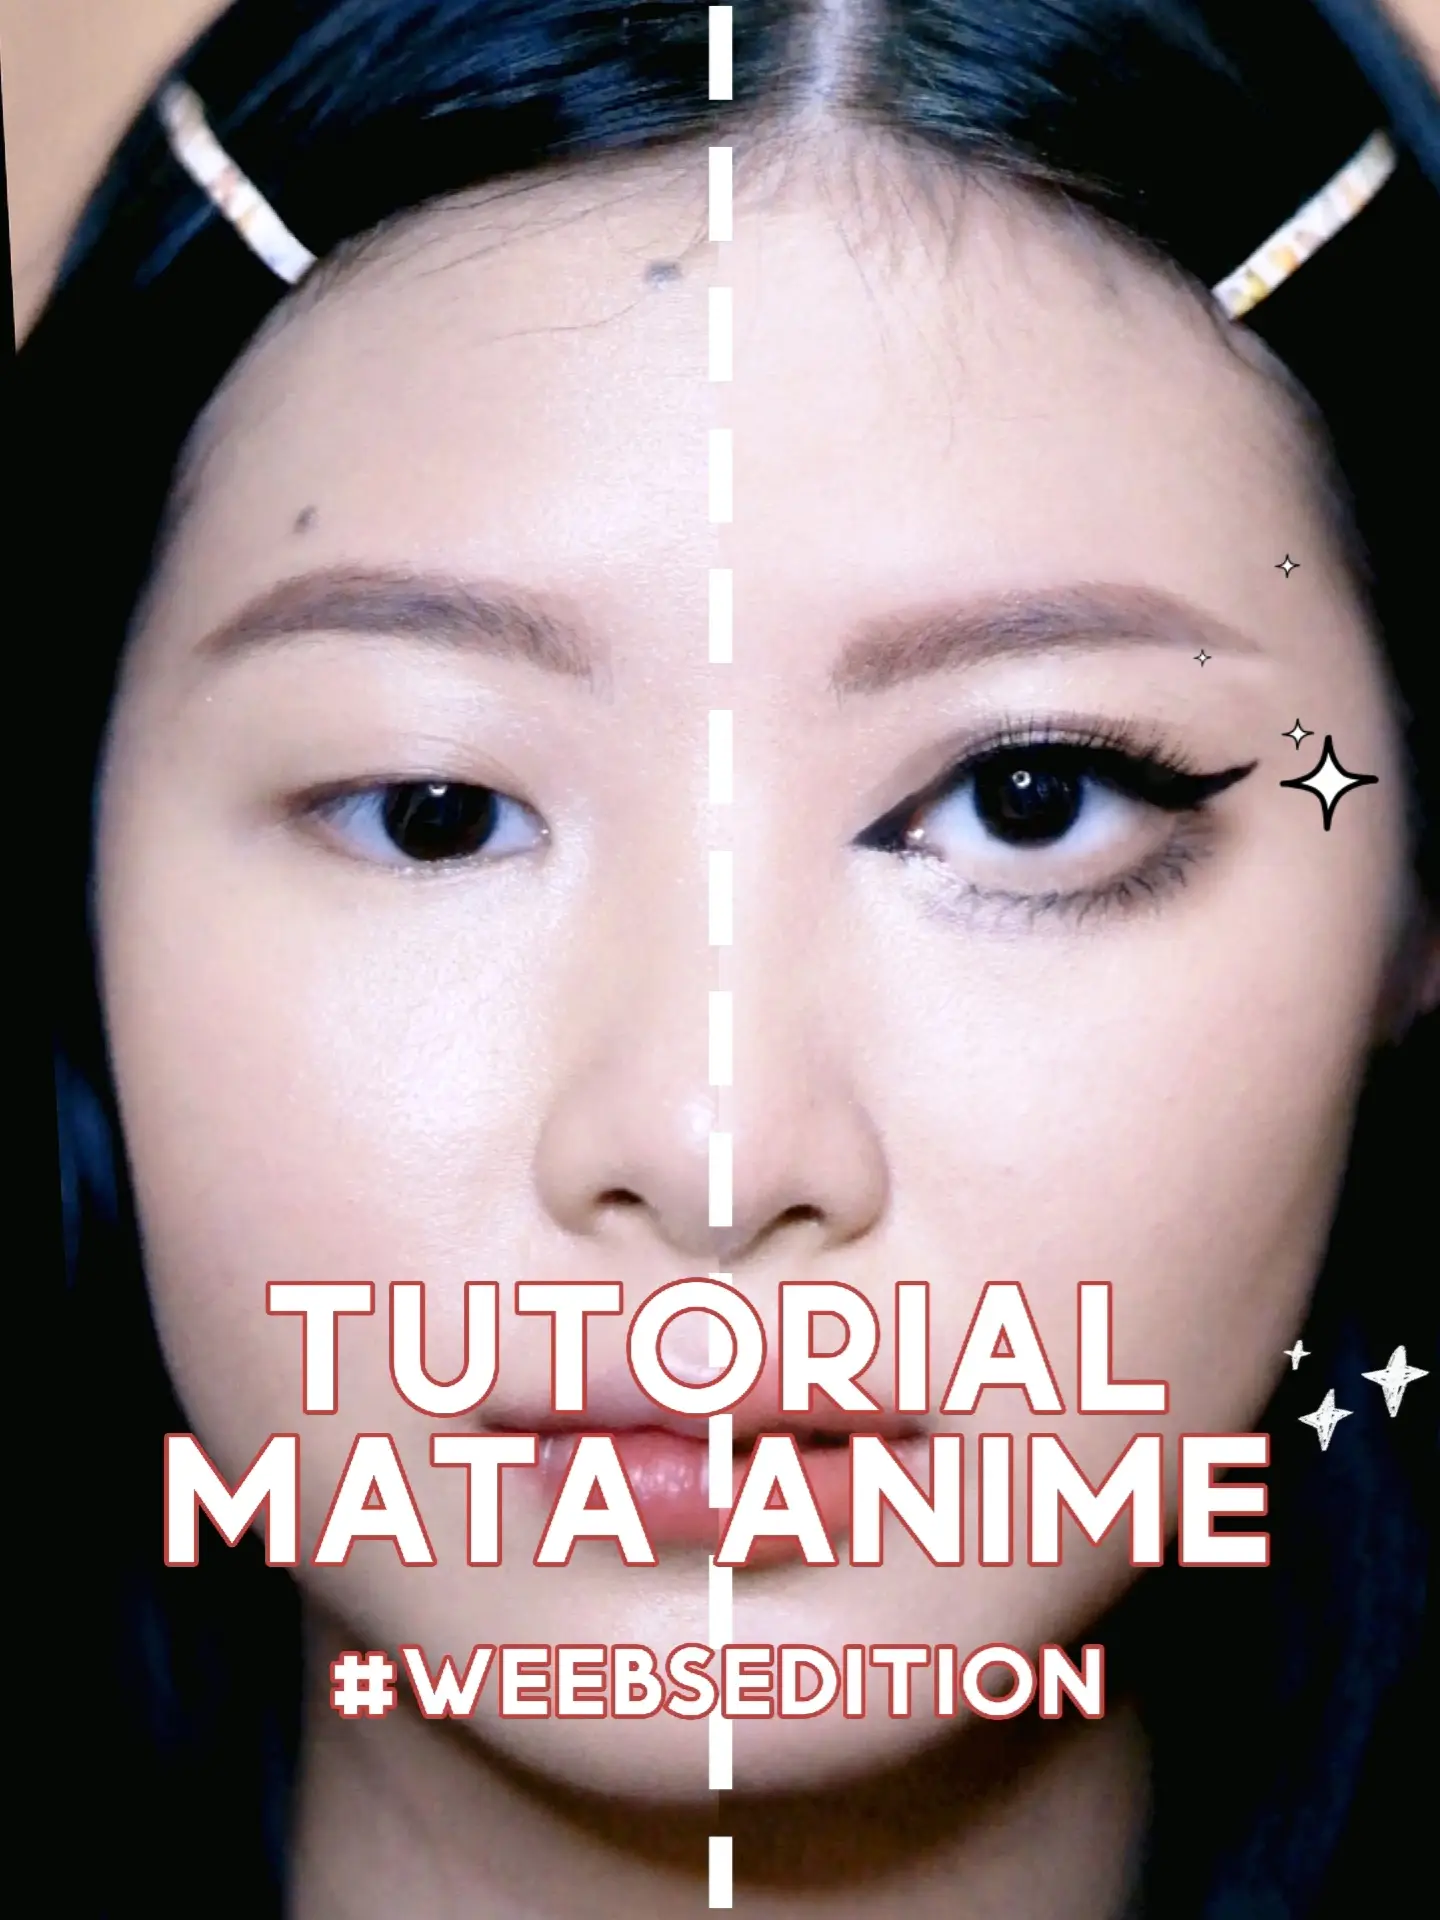 Eye Make Up Tutorial For Anime Look